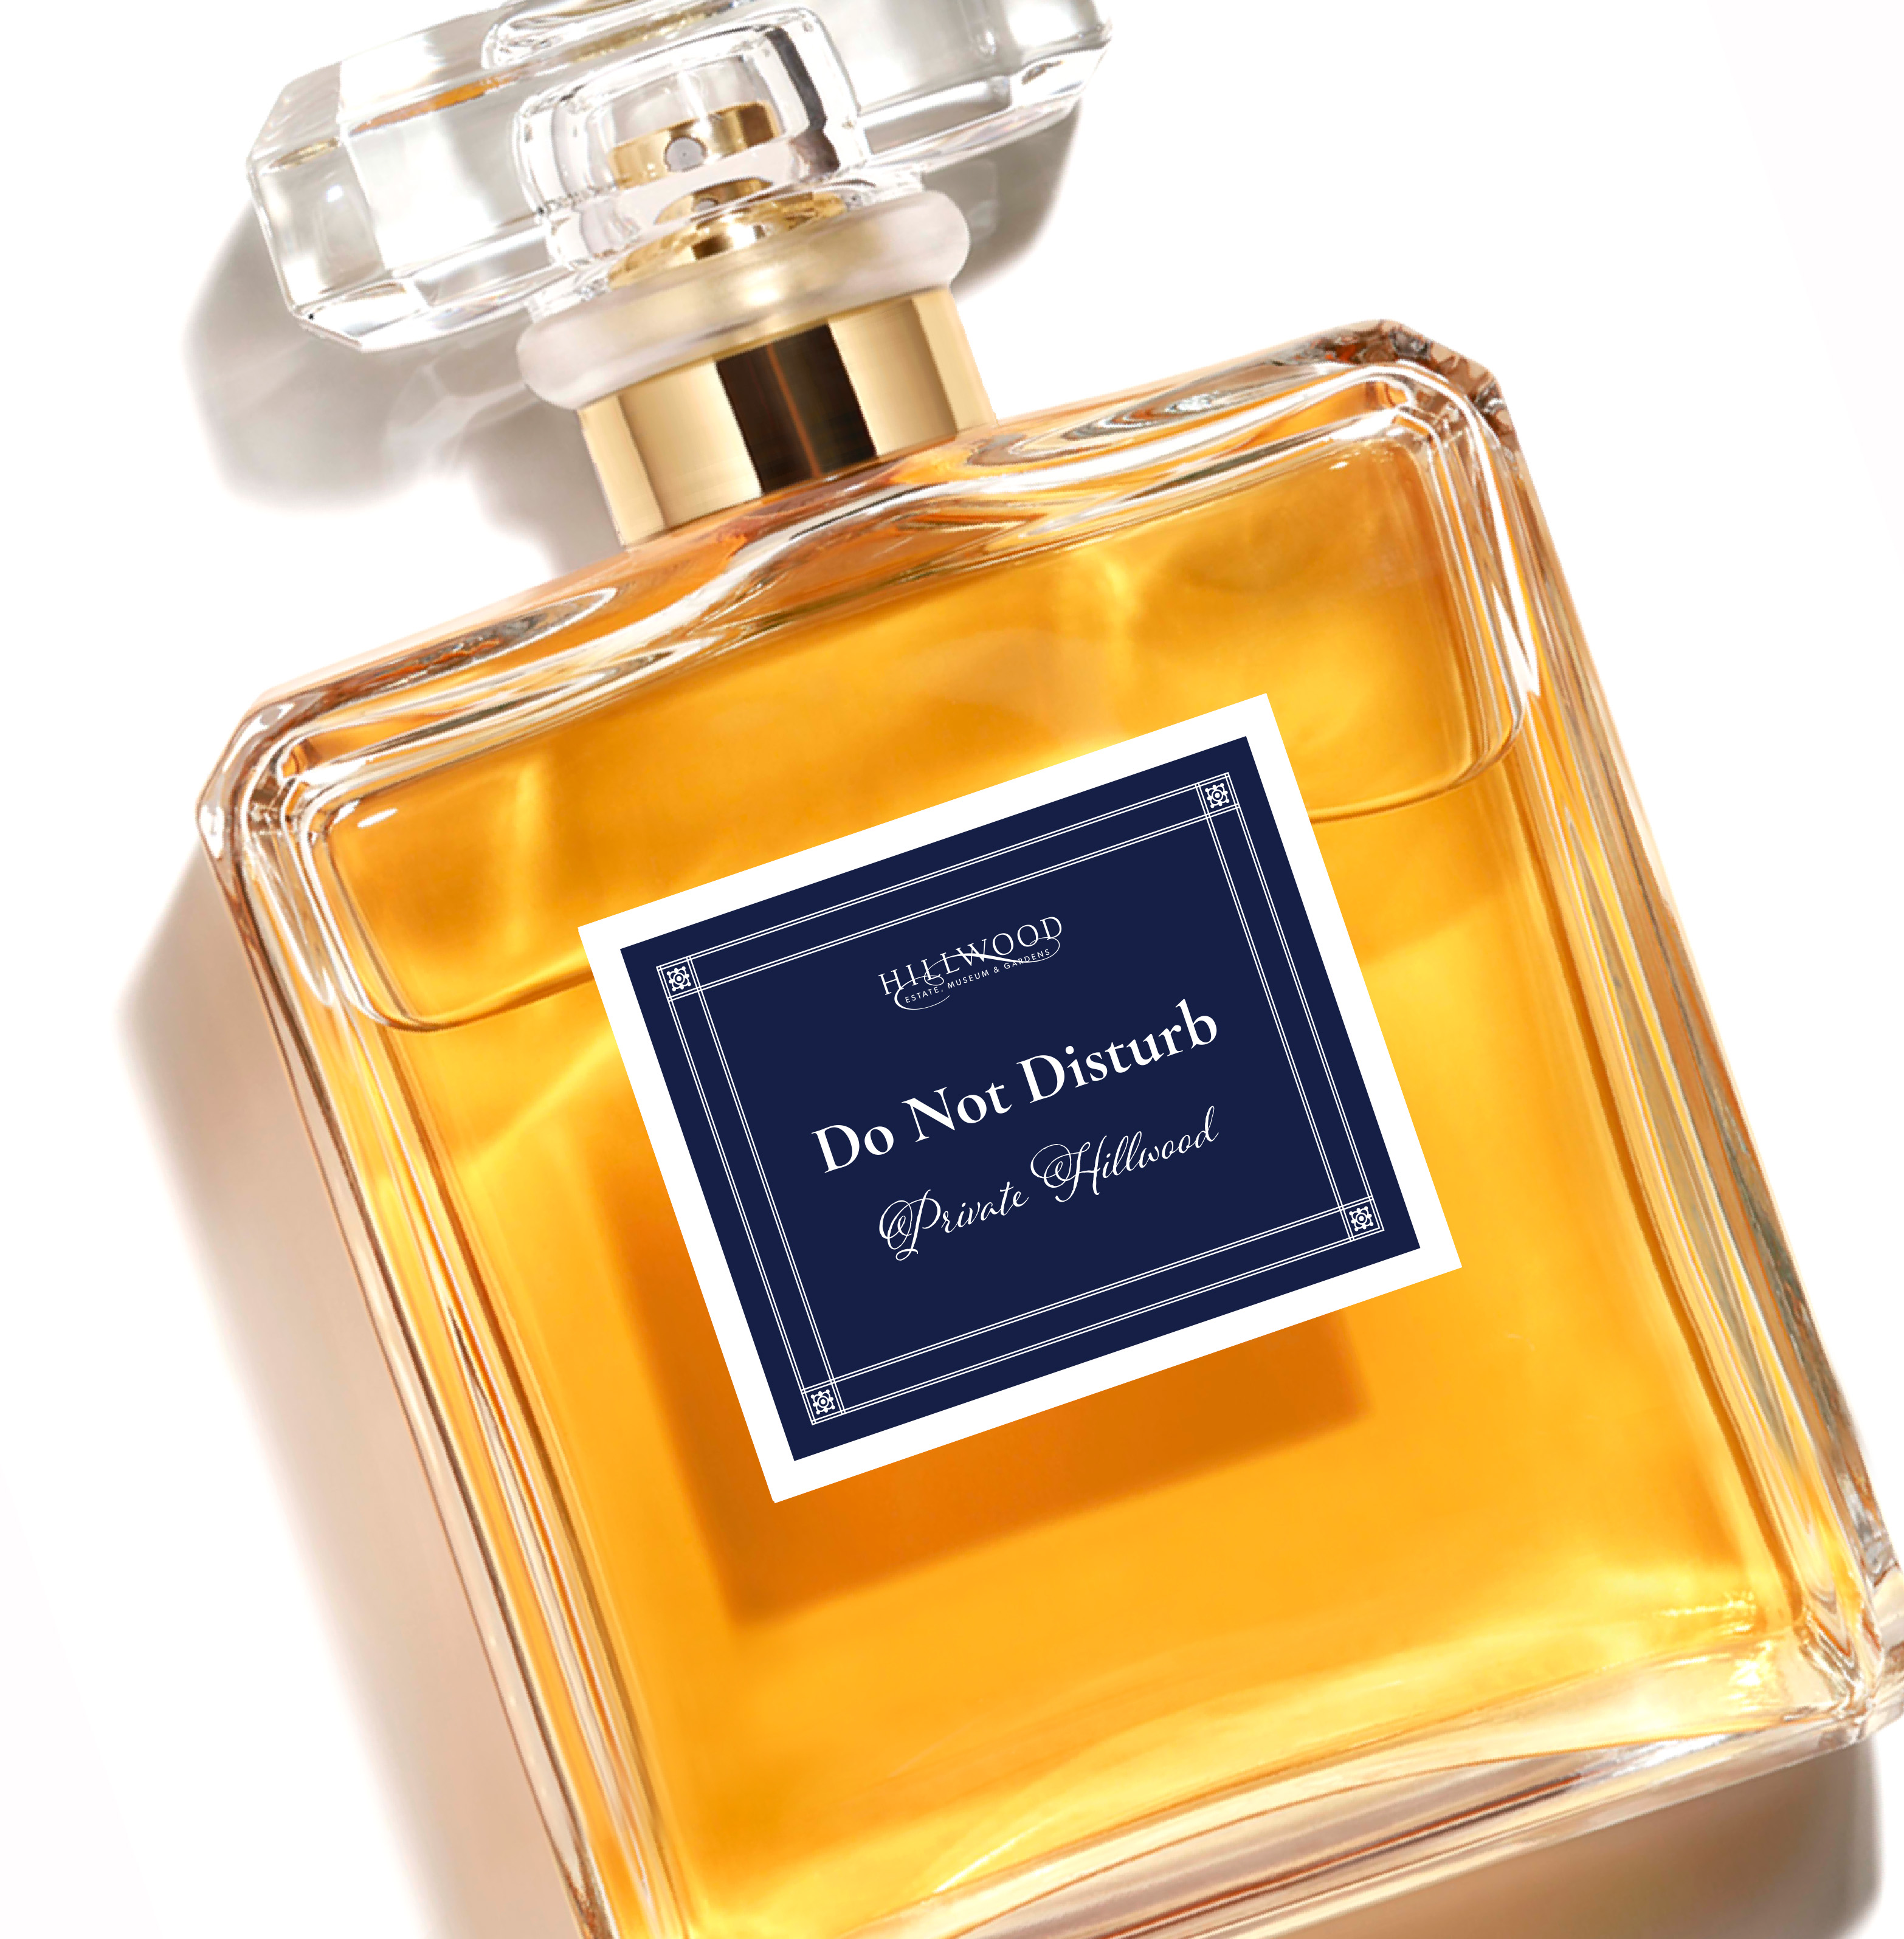 Hillwood's perfume, Do Not Disturb